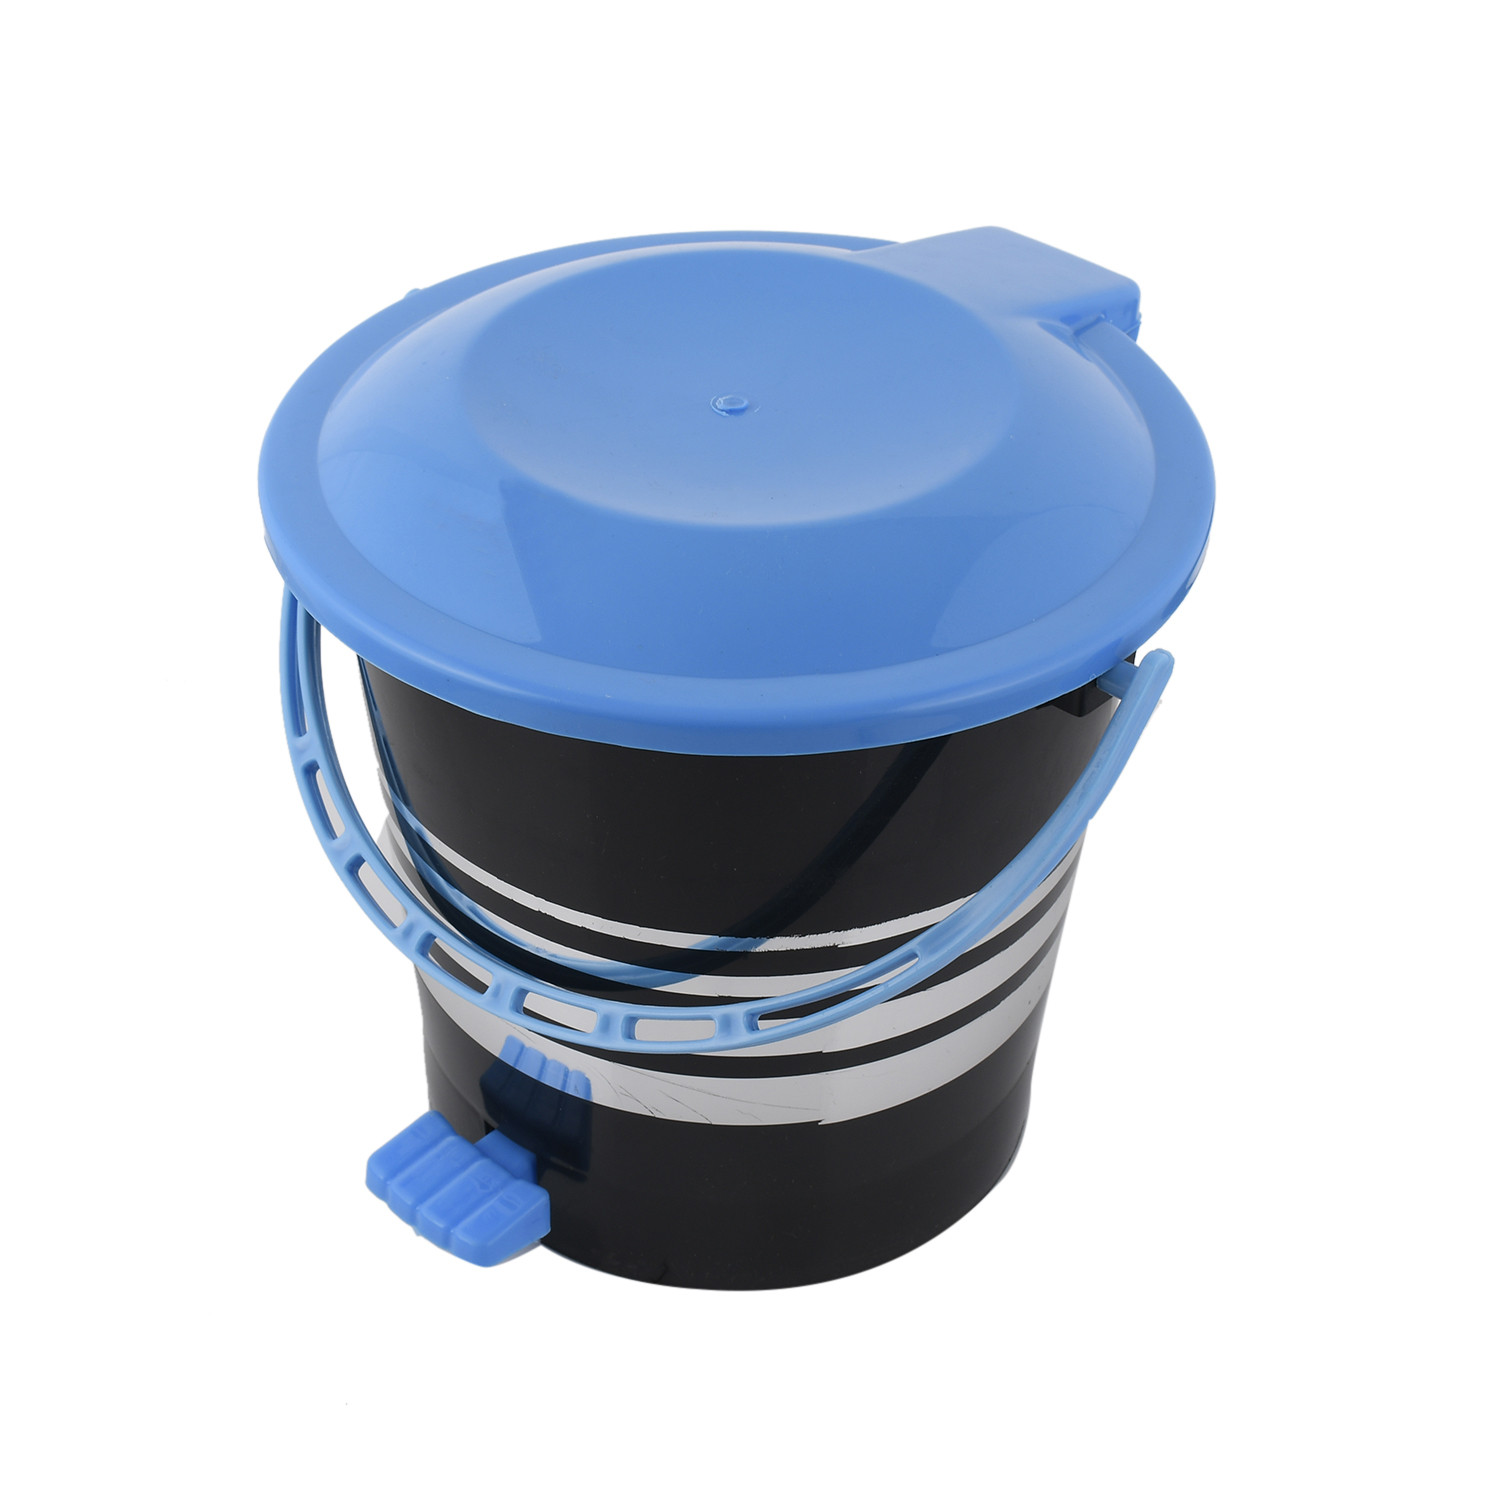 Kuber Industries 2 Pieces Plastic Dustbin Garbage Bin with Handle,10 Liters (Pink & Blue) -CTKTC38035